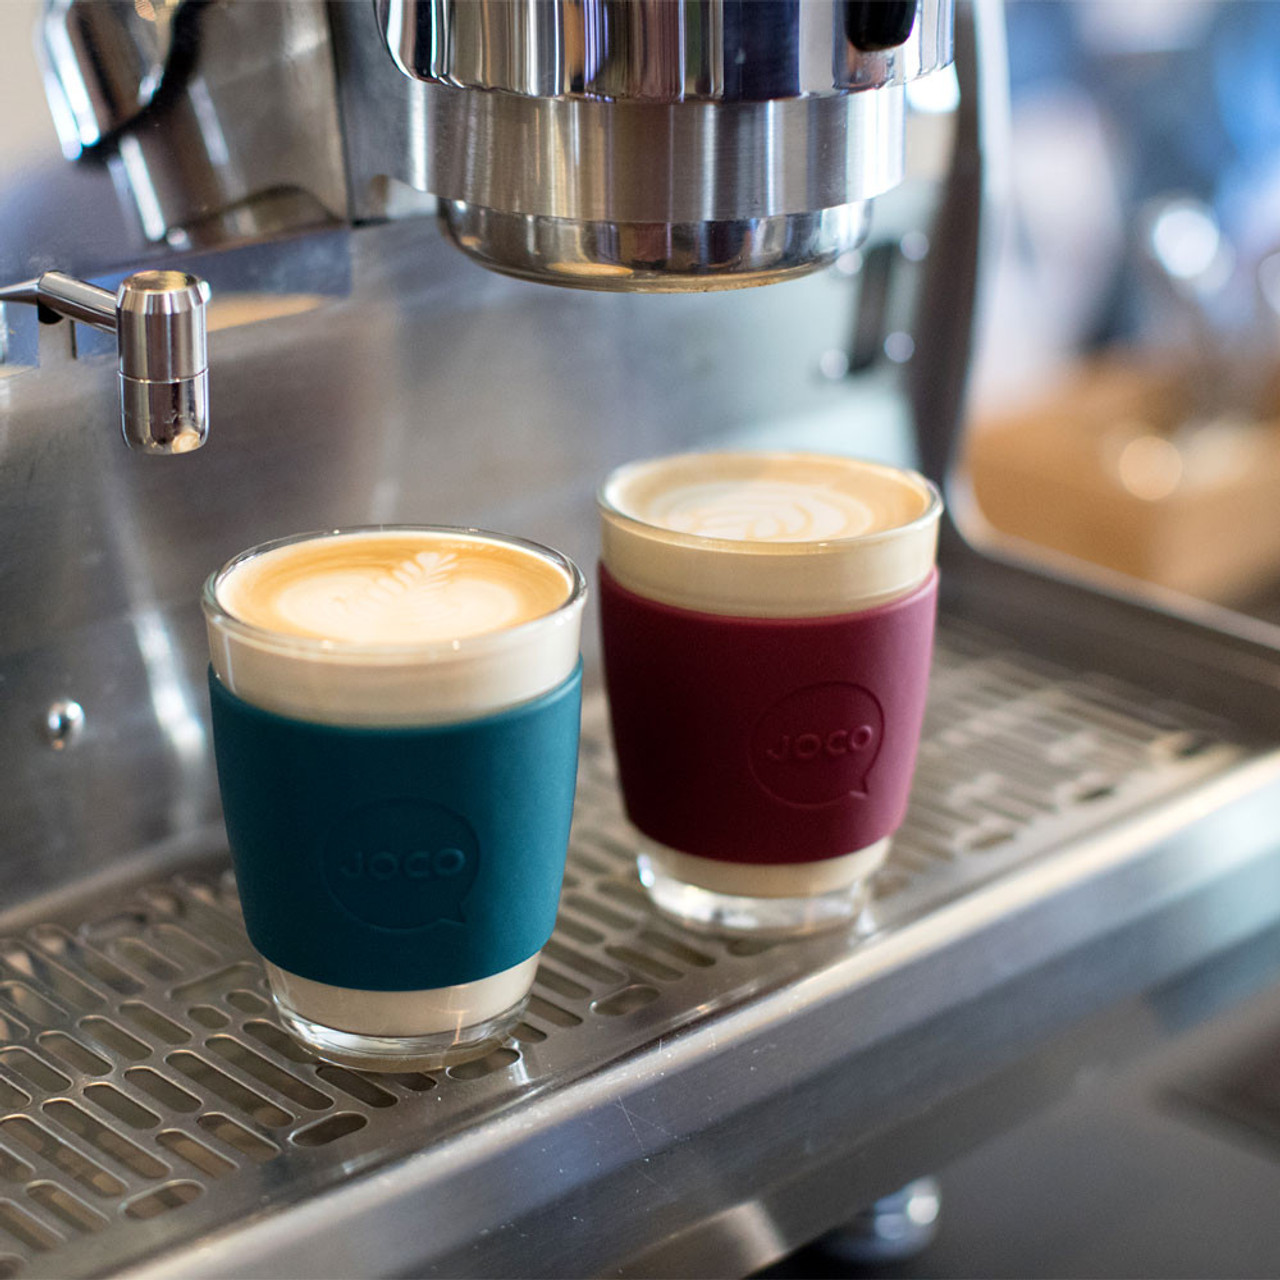 Gorgeous JOCO reusable glass coffee cups